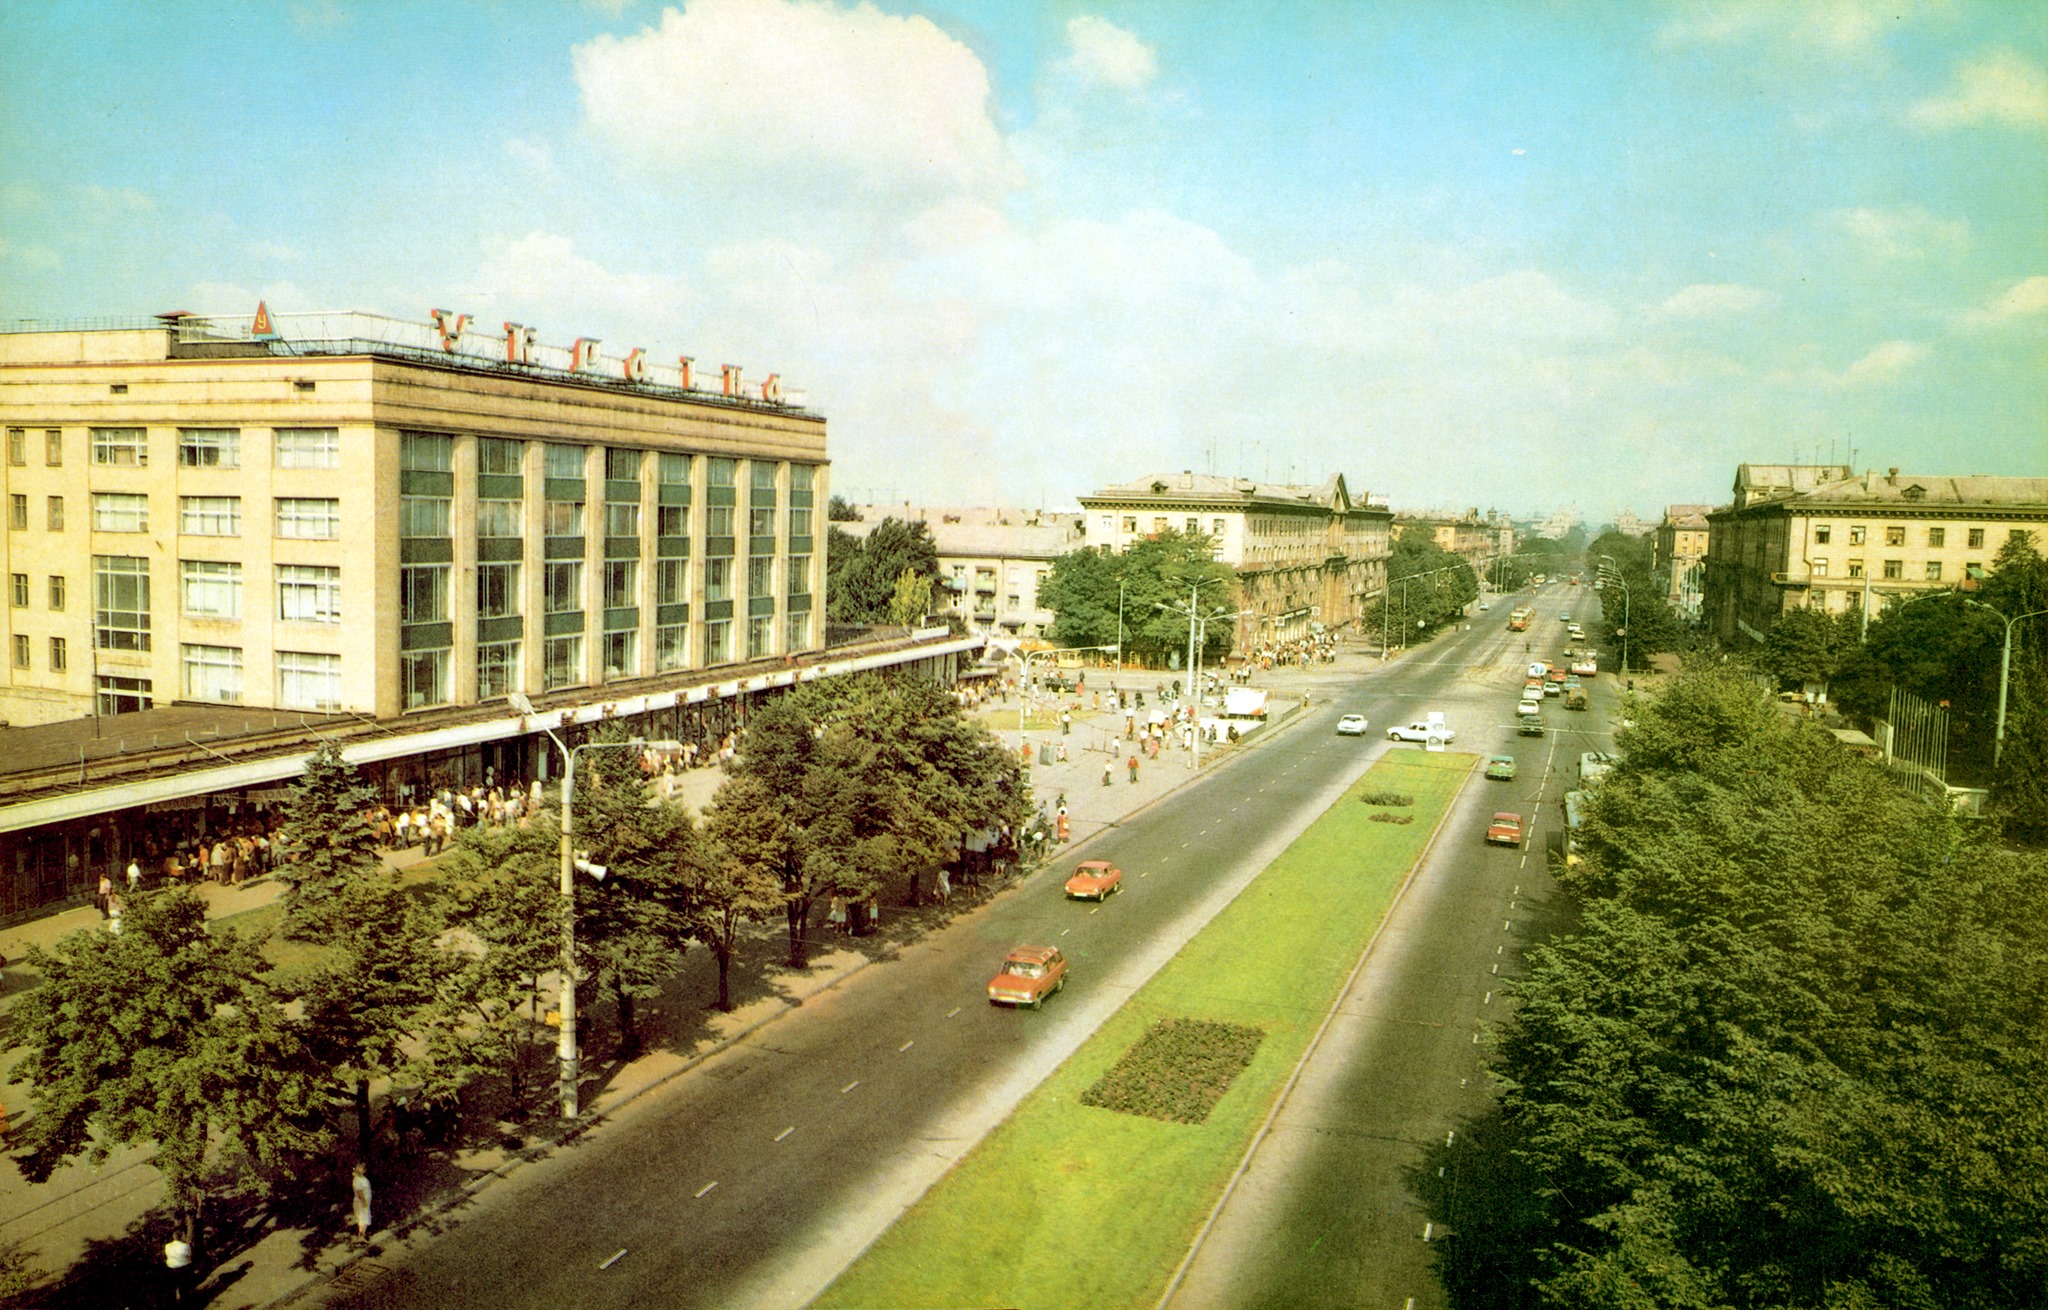 Запорожье — Трамвайная линия на проспекте Ленина (Соборном); Запорожье — Троллейбусные линии